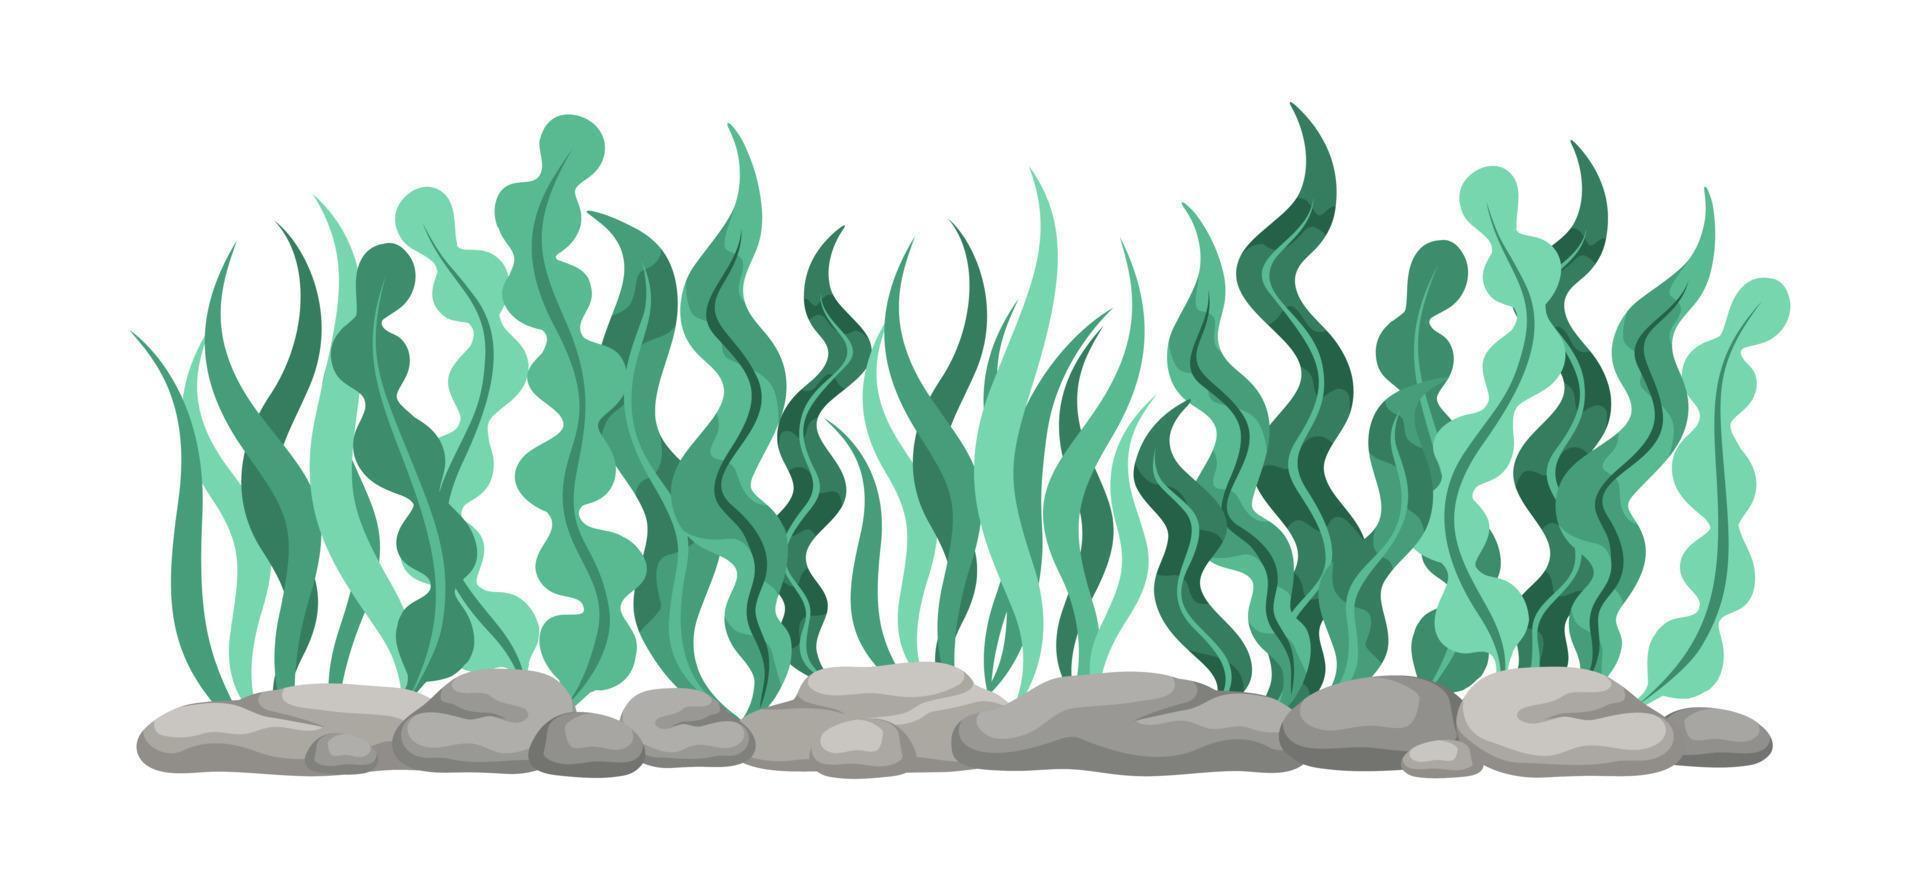 submarino organismo algas algas marinas garabatear vector. orgánico agua planta ilustración. vector